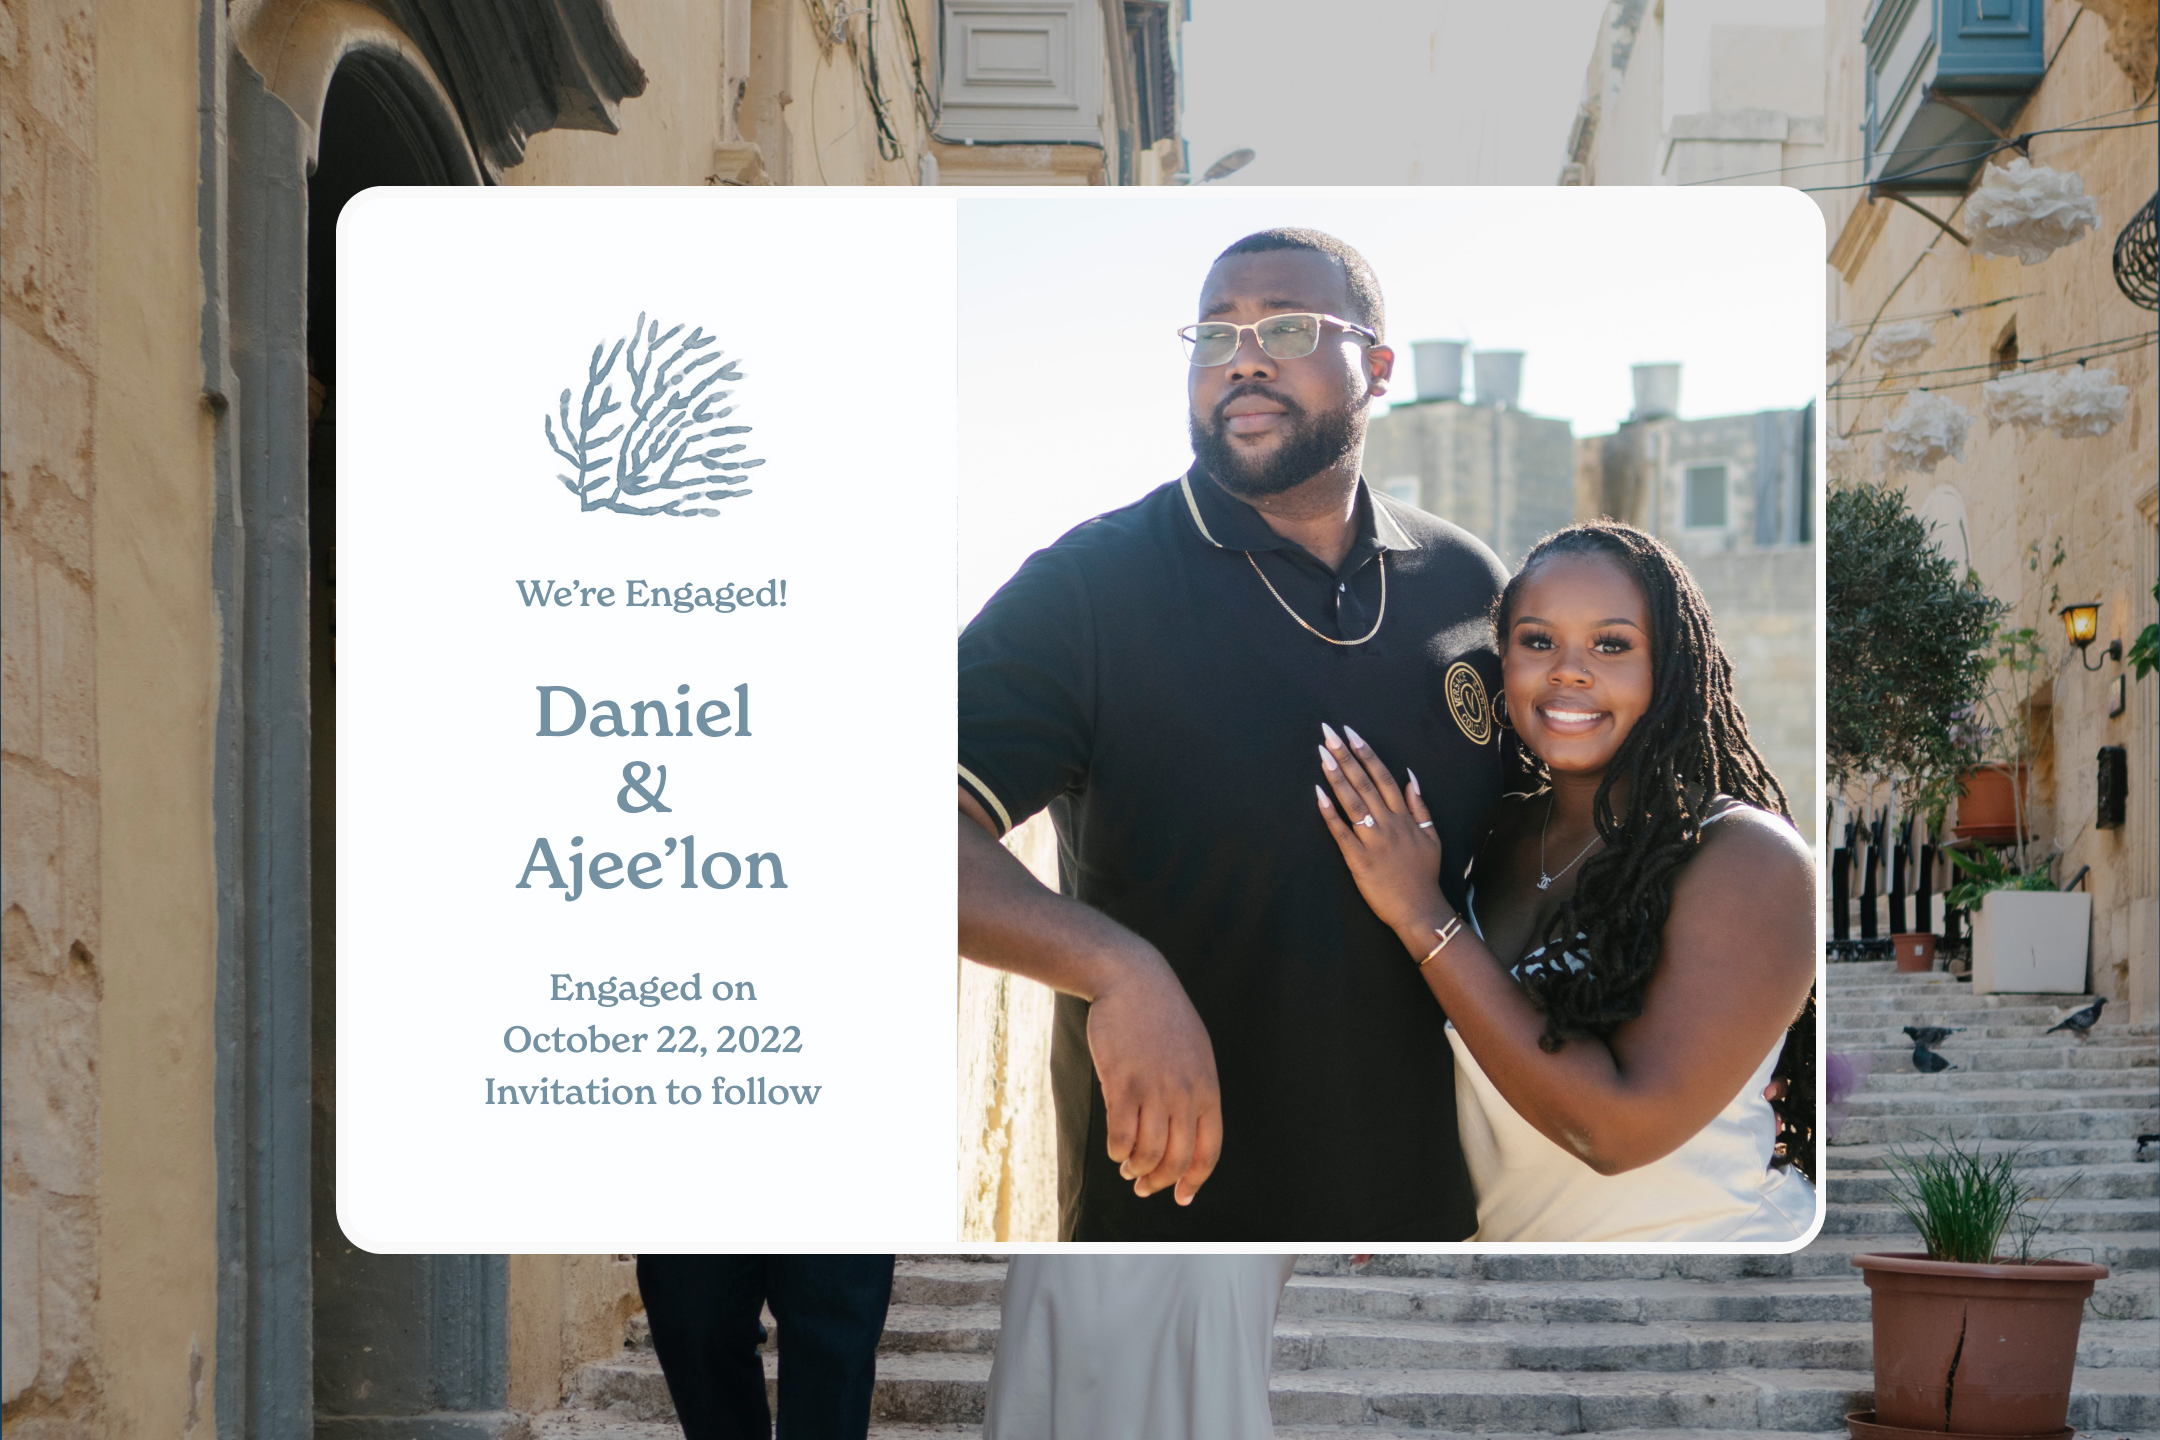 Daniel & Ajee’lon — The Day it All Began